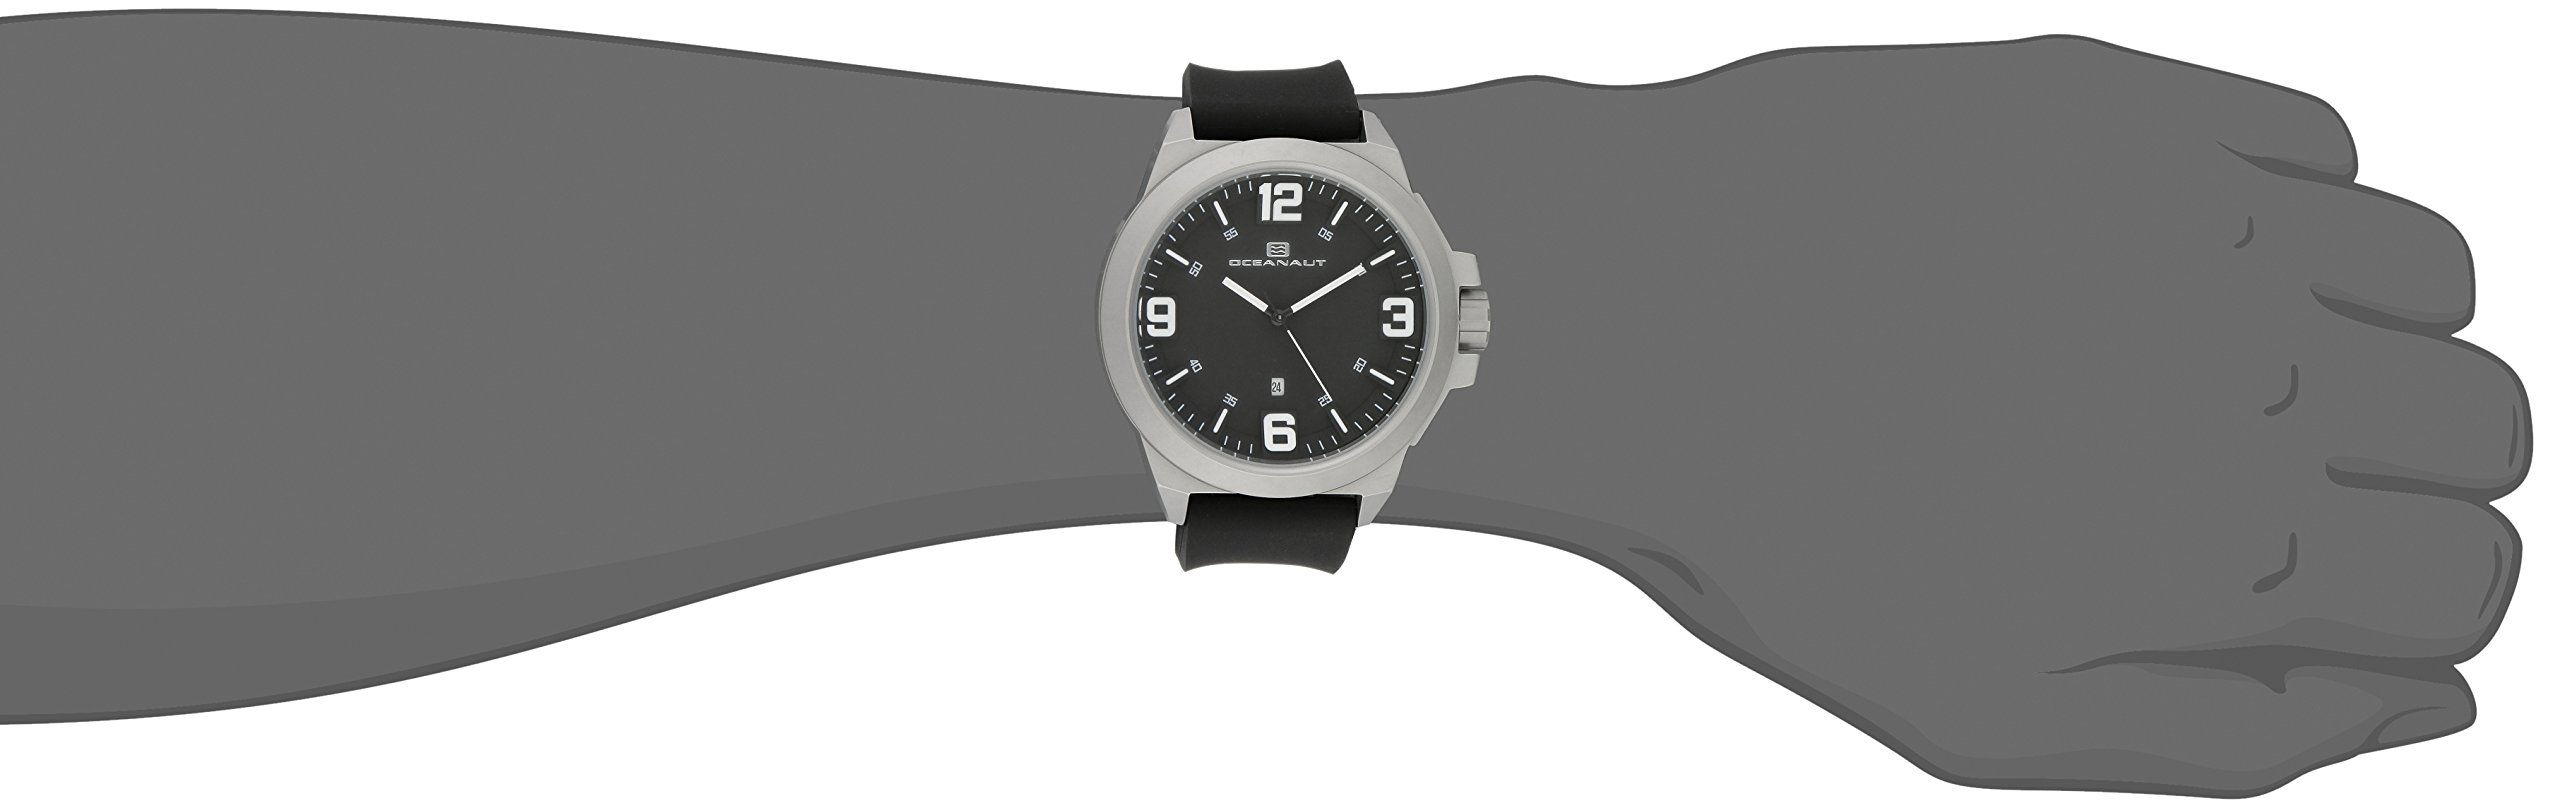 Oceanaut Men's OC7117 Armada Analog Display Quartz Black Watch